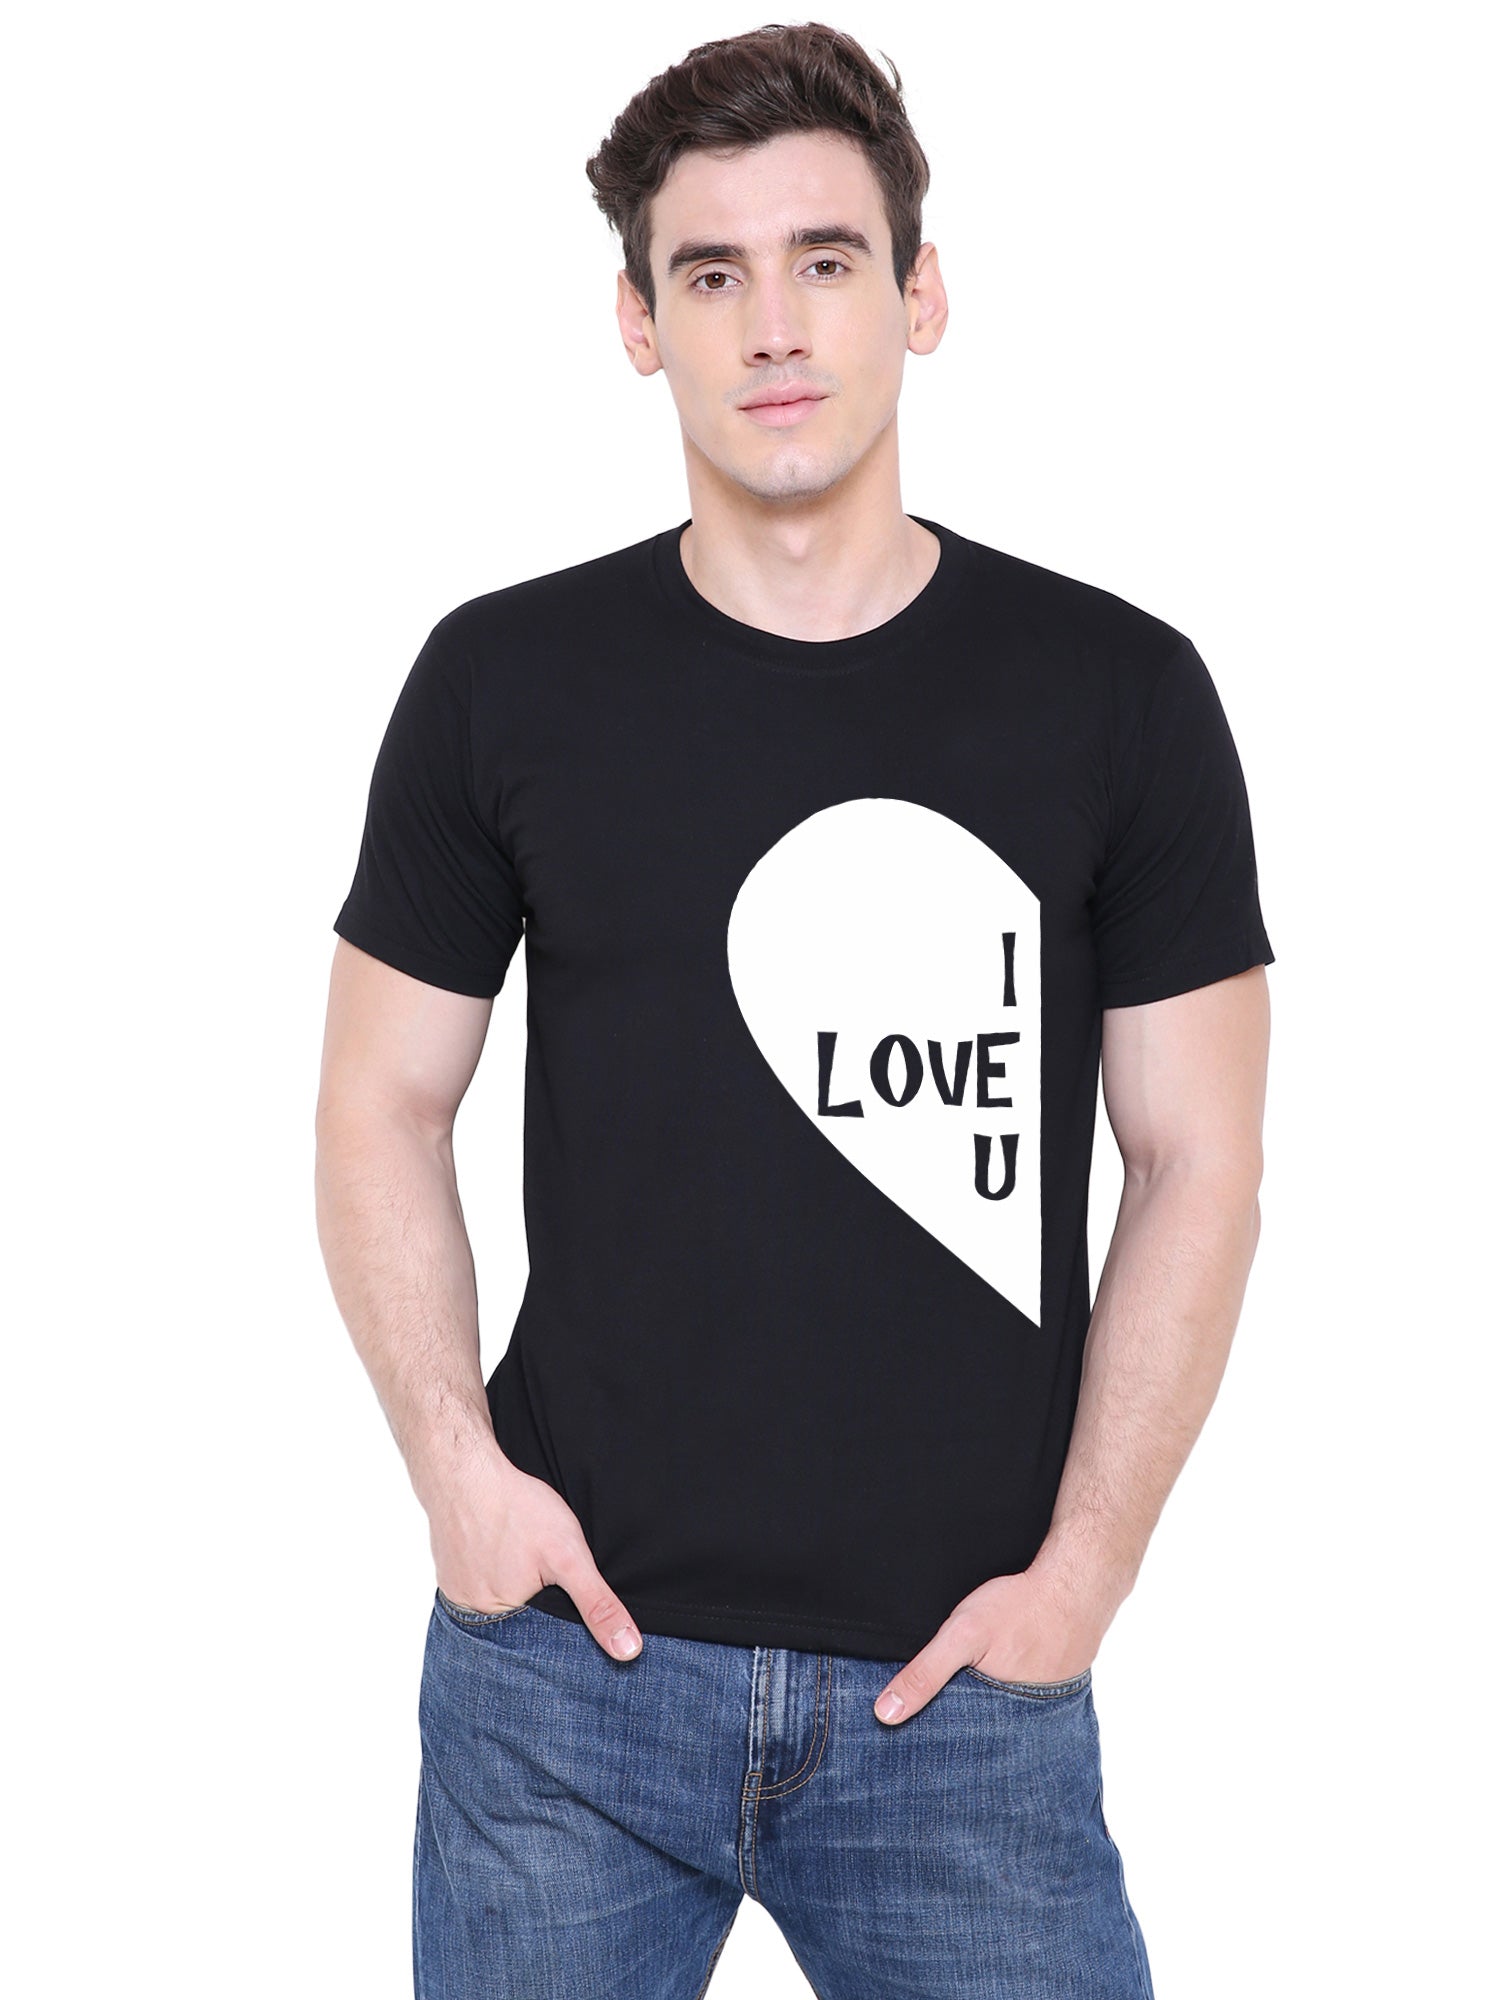 Half Heart matching Couple T shirts- Black